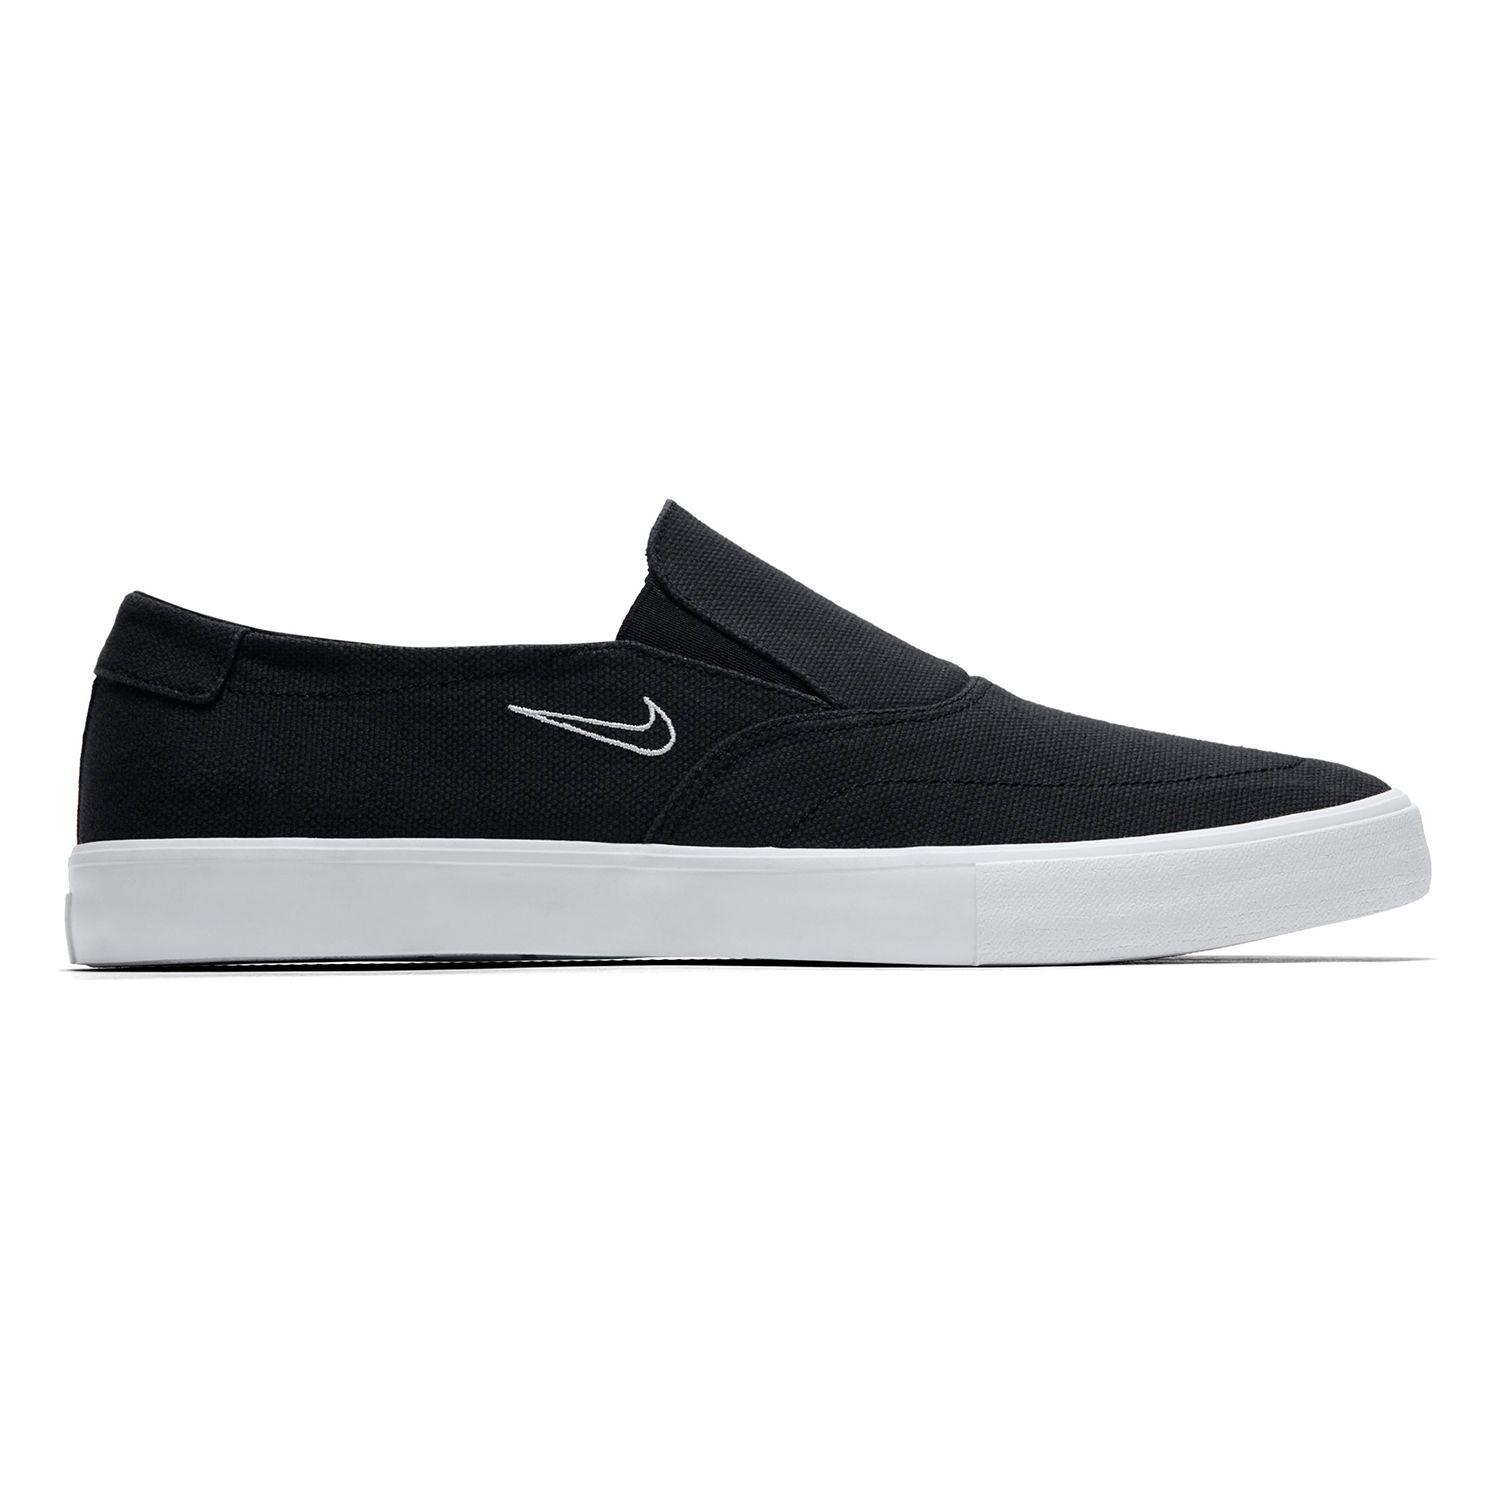 Nike SB Portmore II Slip Men's Skate Shoes